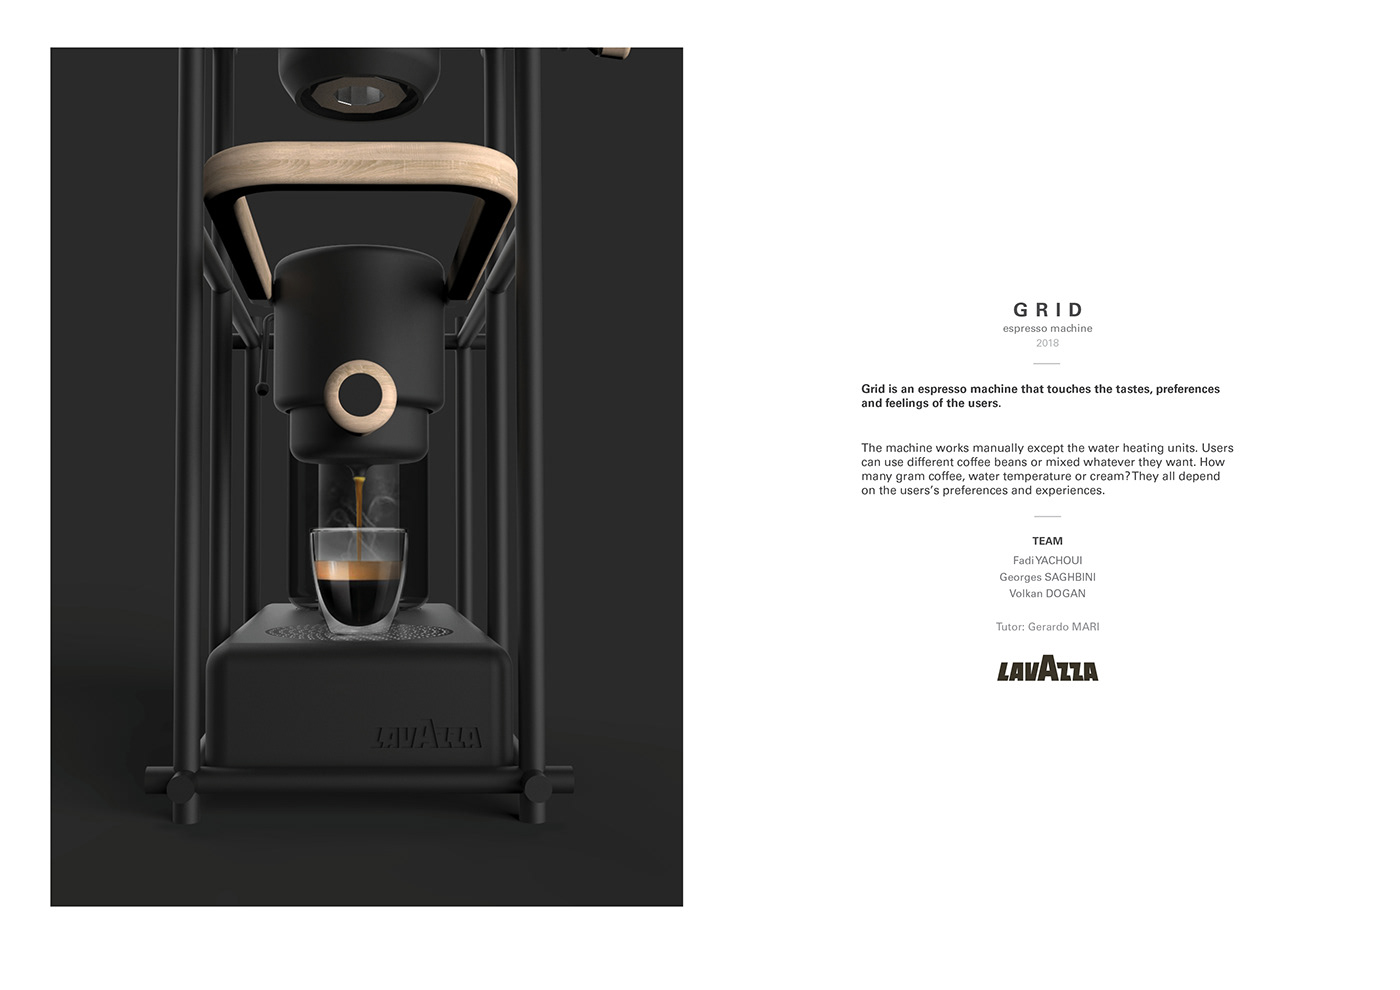 espresso espressomachine coffeemachine coffeemaker Lavazza mondrian structure Portafilter driptray productdesign